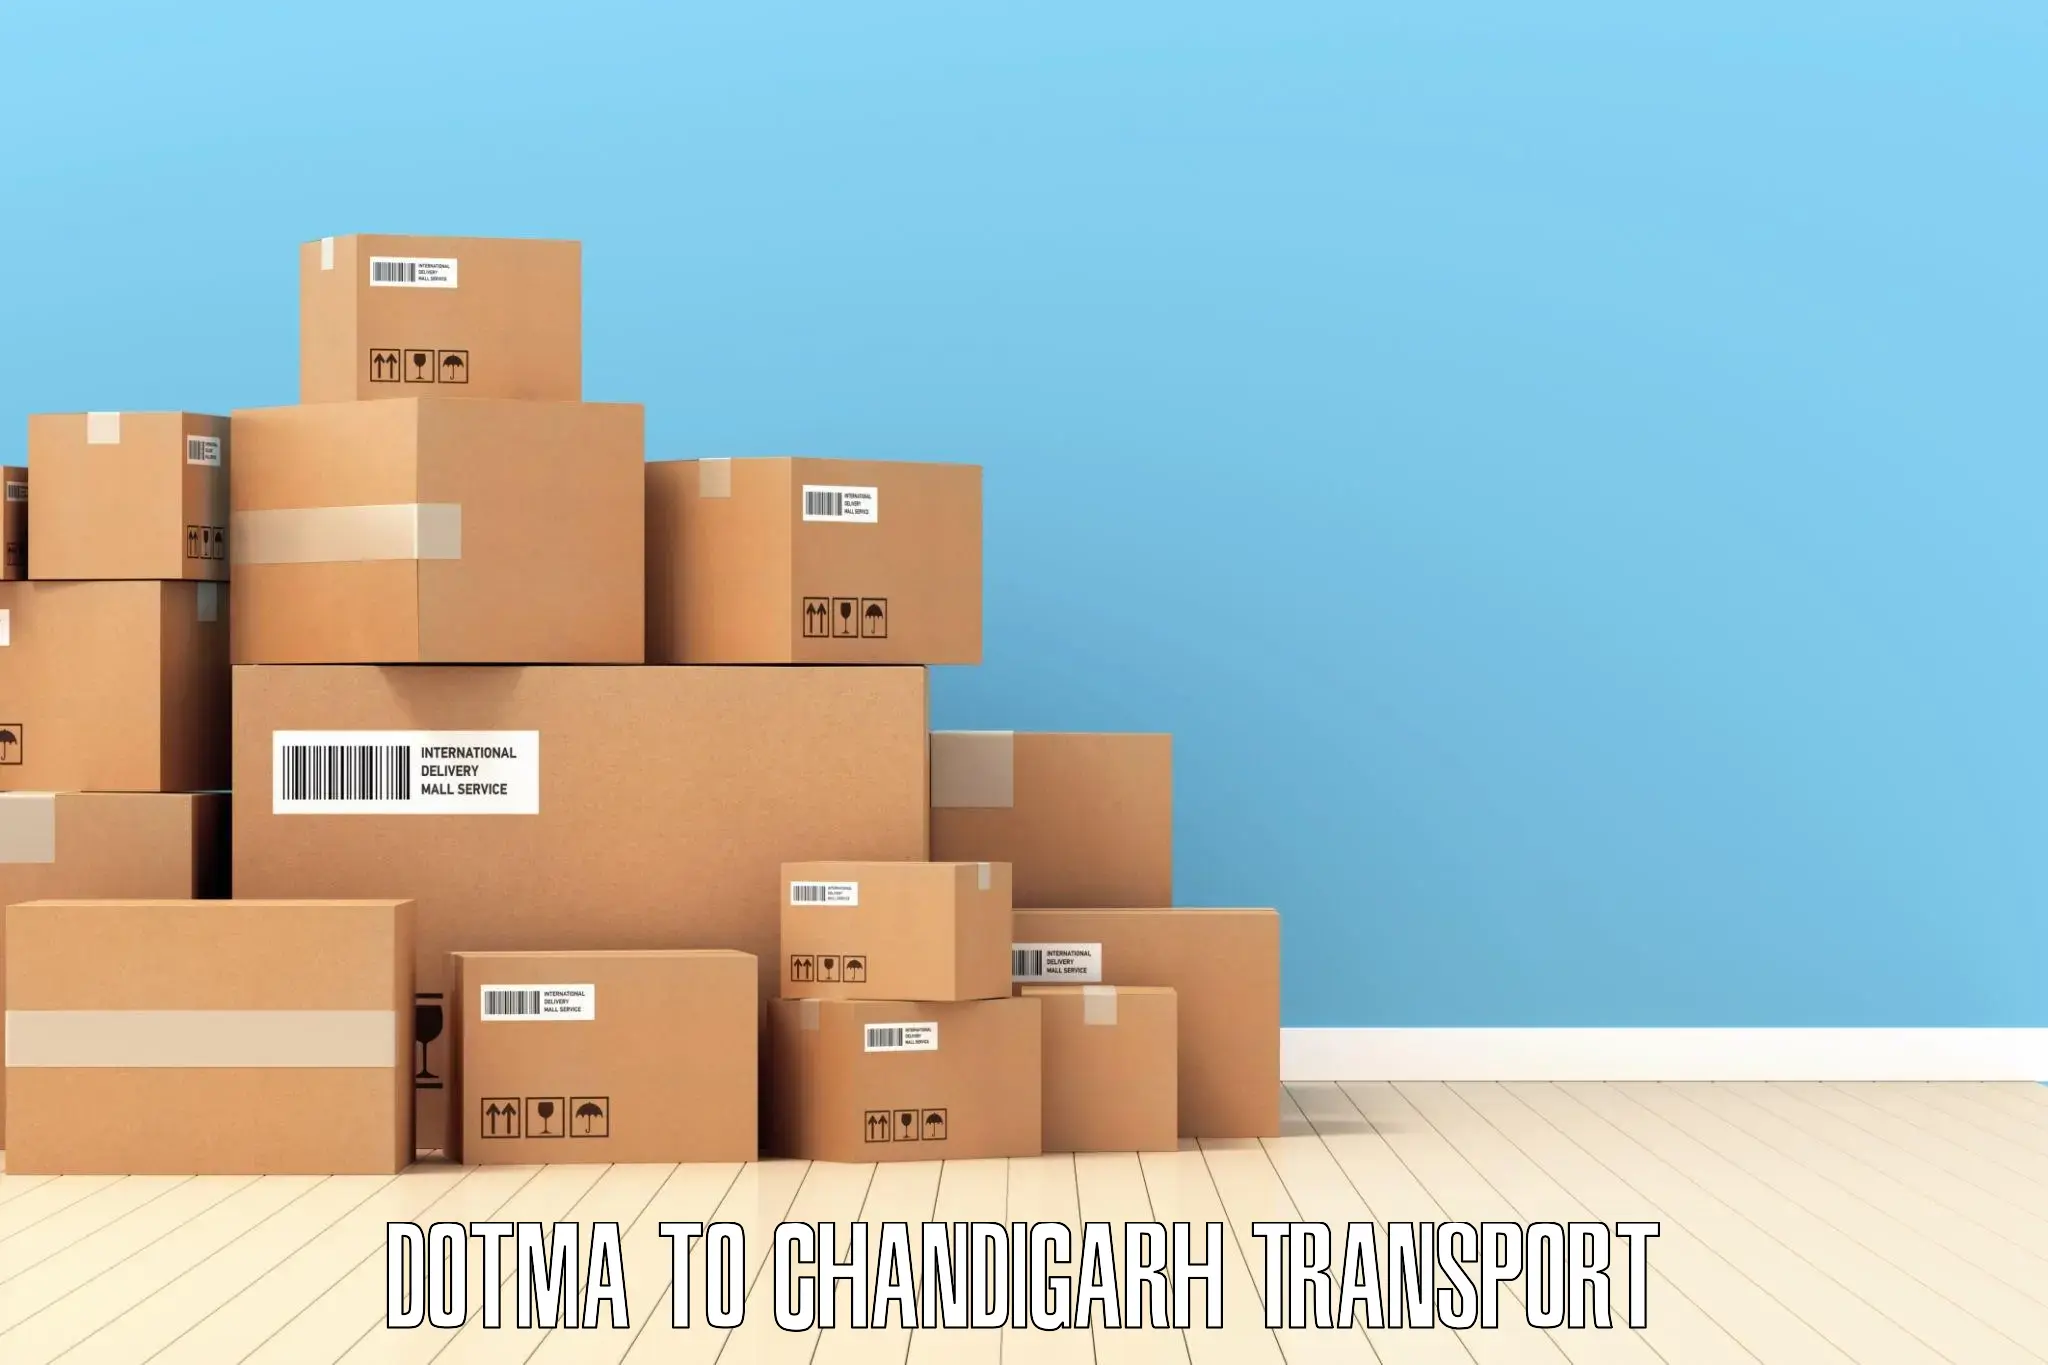 Transport in sharing Dotma to Chandigarh